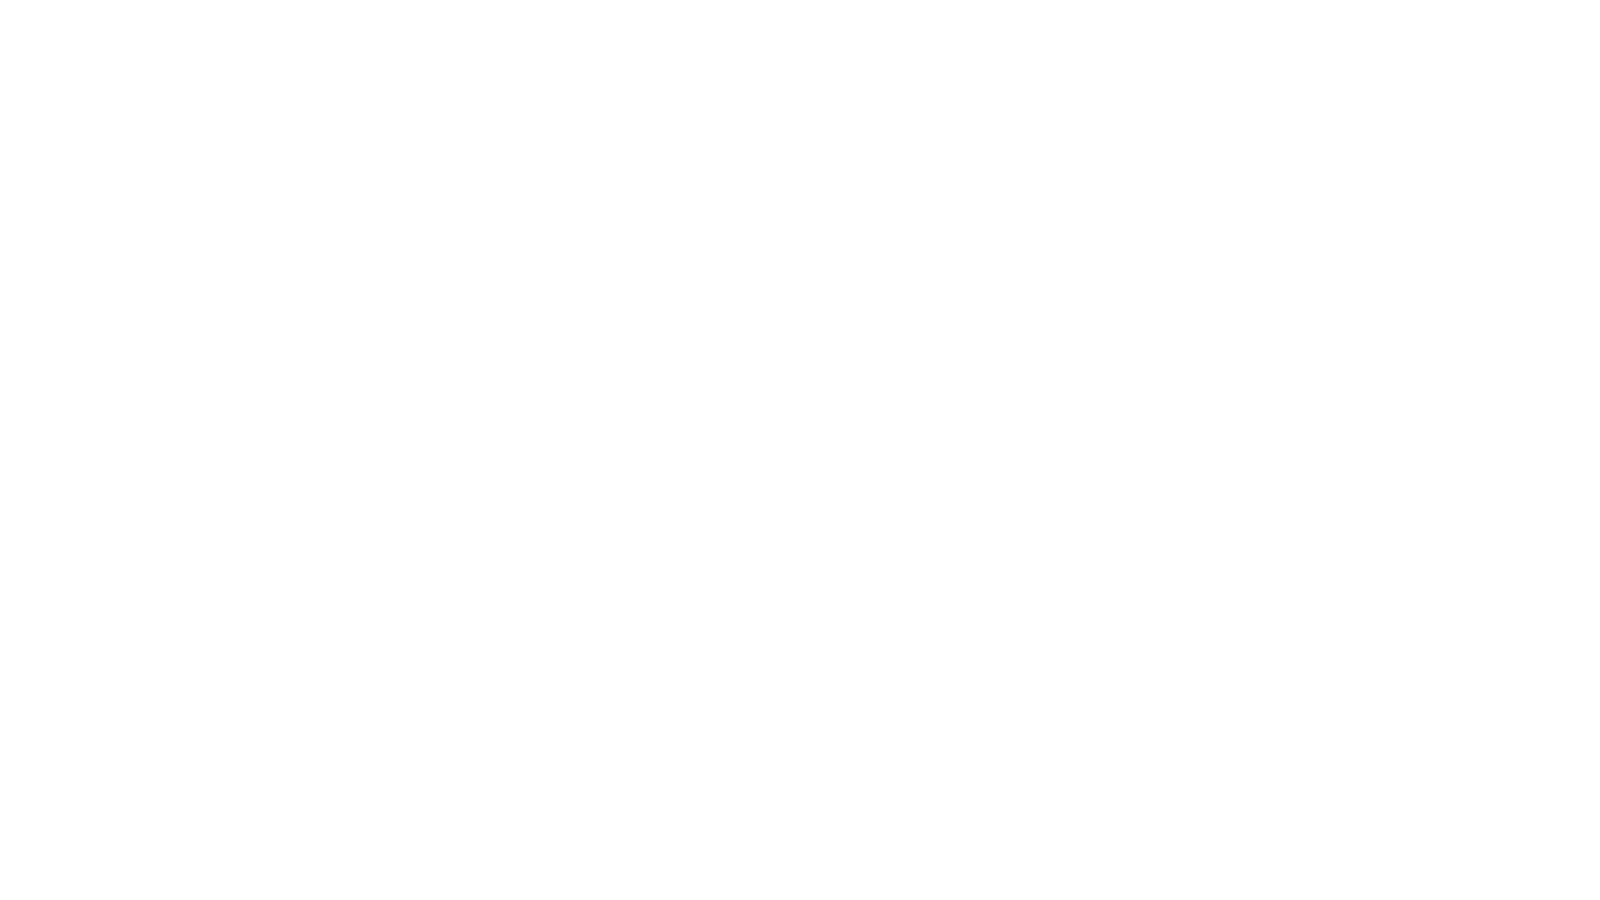 Watch the full timelapse during the reaction for episode three of Netflix's Sandman, "Dream a Little Dream of Me" starring my bae Jenna Coleman as Johanna Constantine: https://youtu.be/B5xTD8BsaGw

#sandman